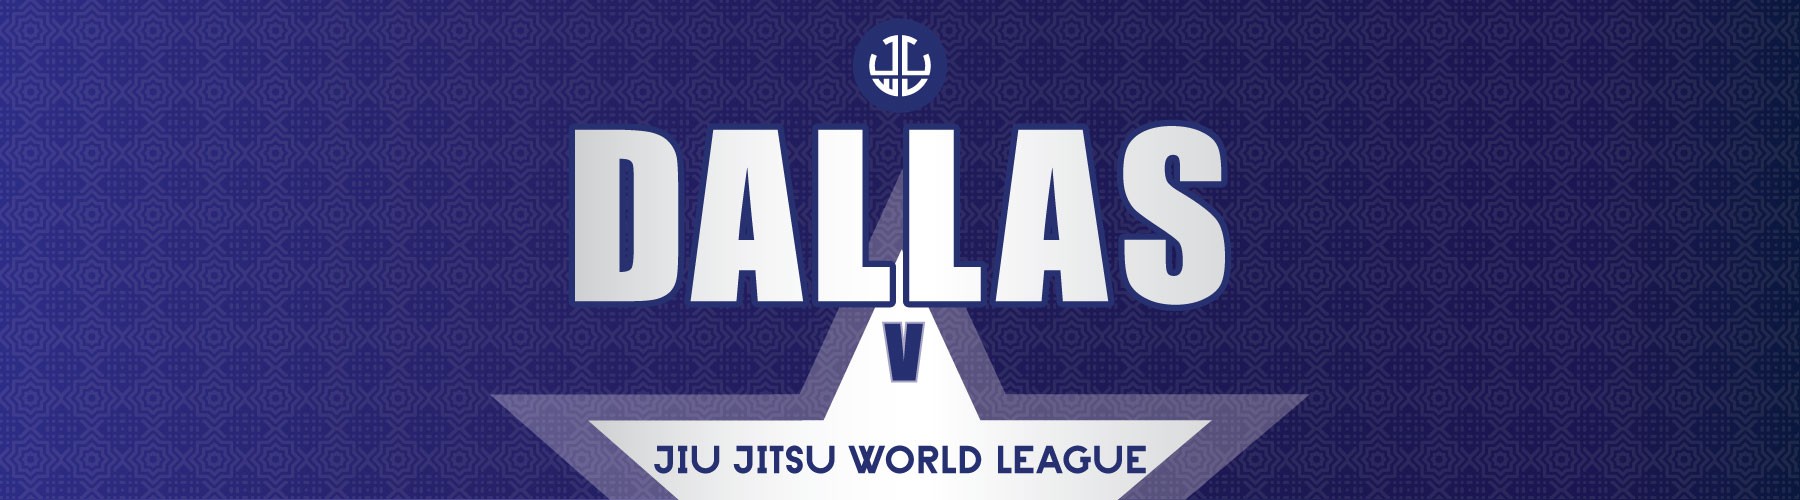 Jiu Jitsu World League Event Registration